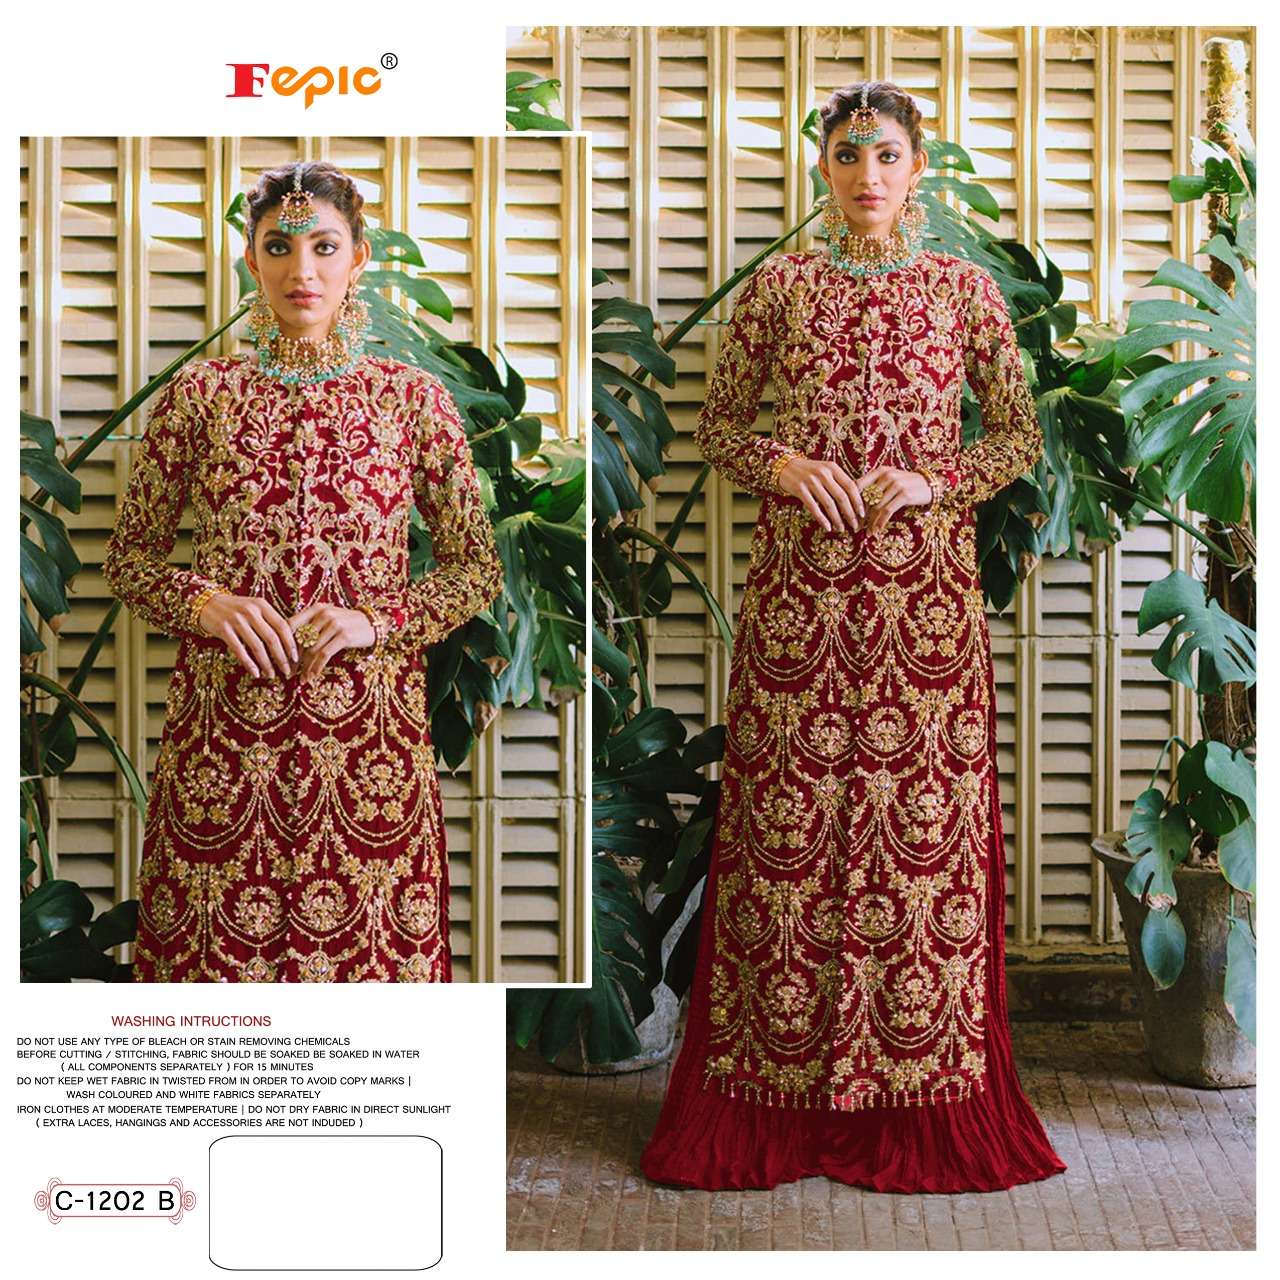 fepic 1202 colour edition designer look salwar kameez wholesale price surat